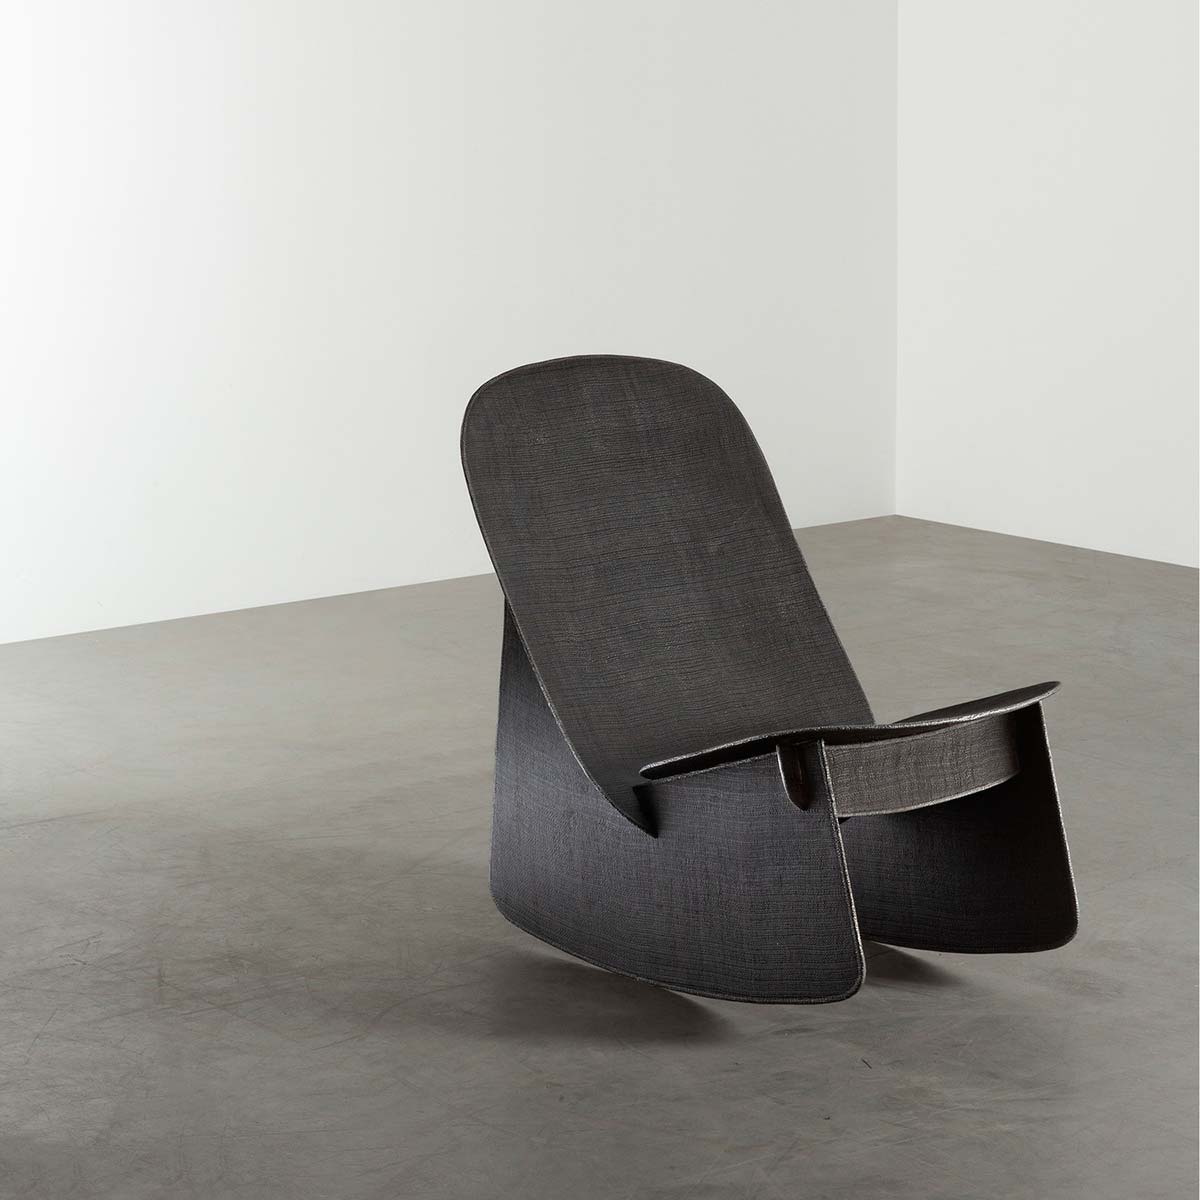 Carpenters Workshop Gallery London, Tiss-Tiss rocking chair by Aki+Arnaud Cooren